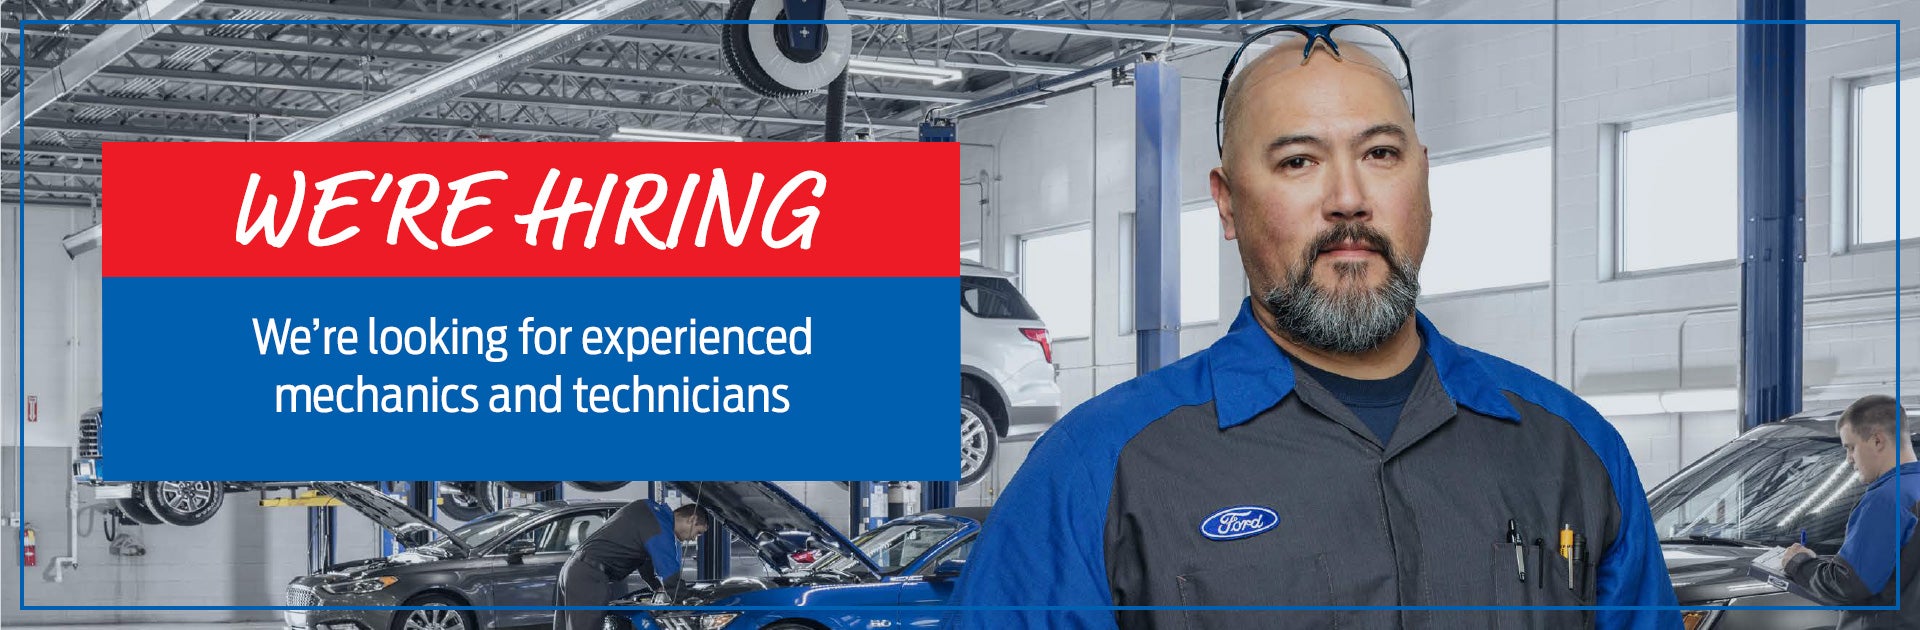 Napa Ford - Hiring Technicians and Mechanics in Napa CA